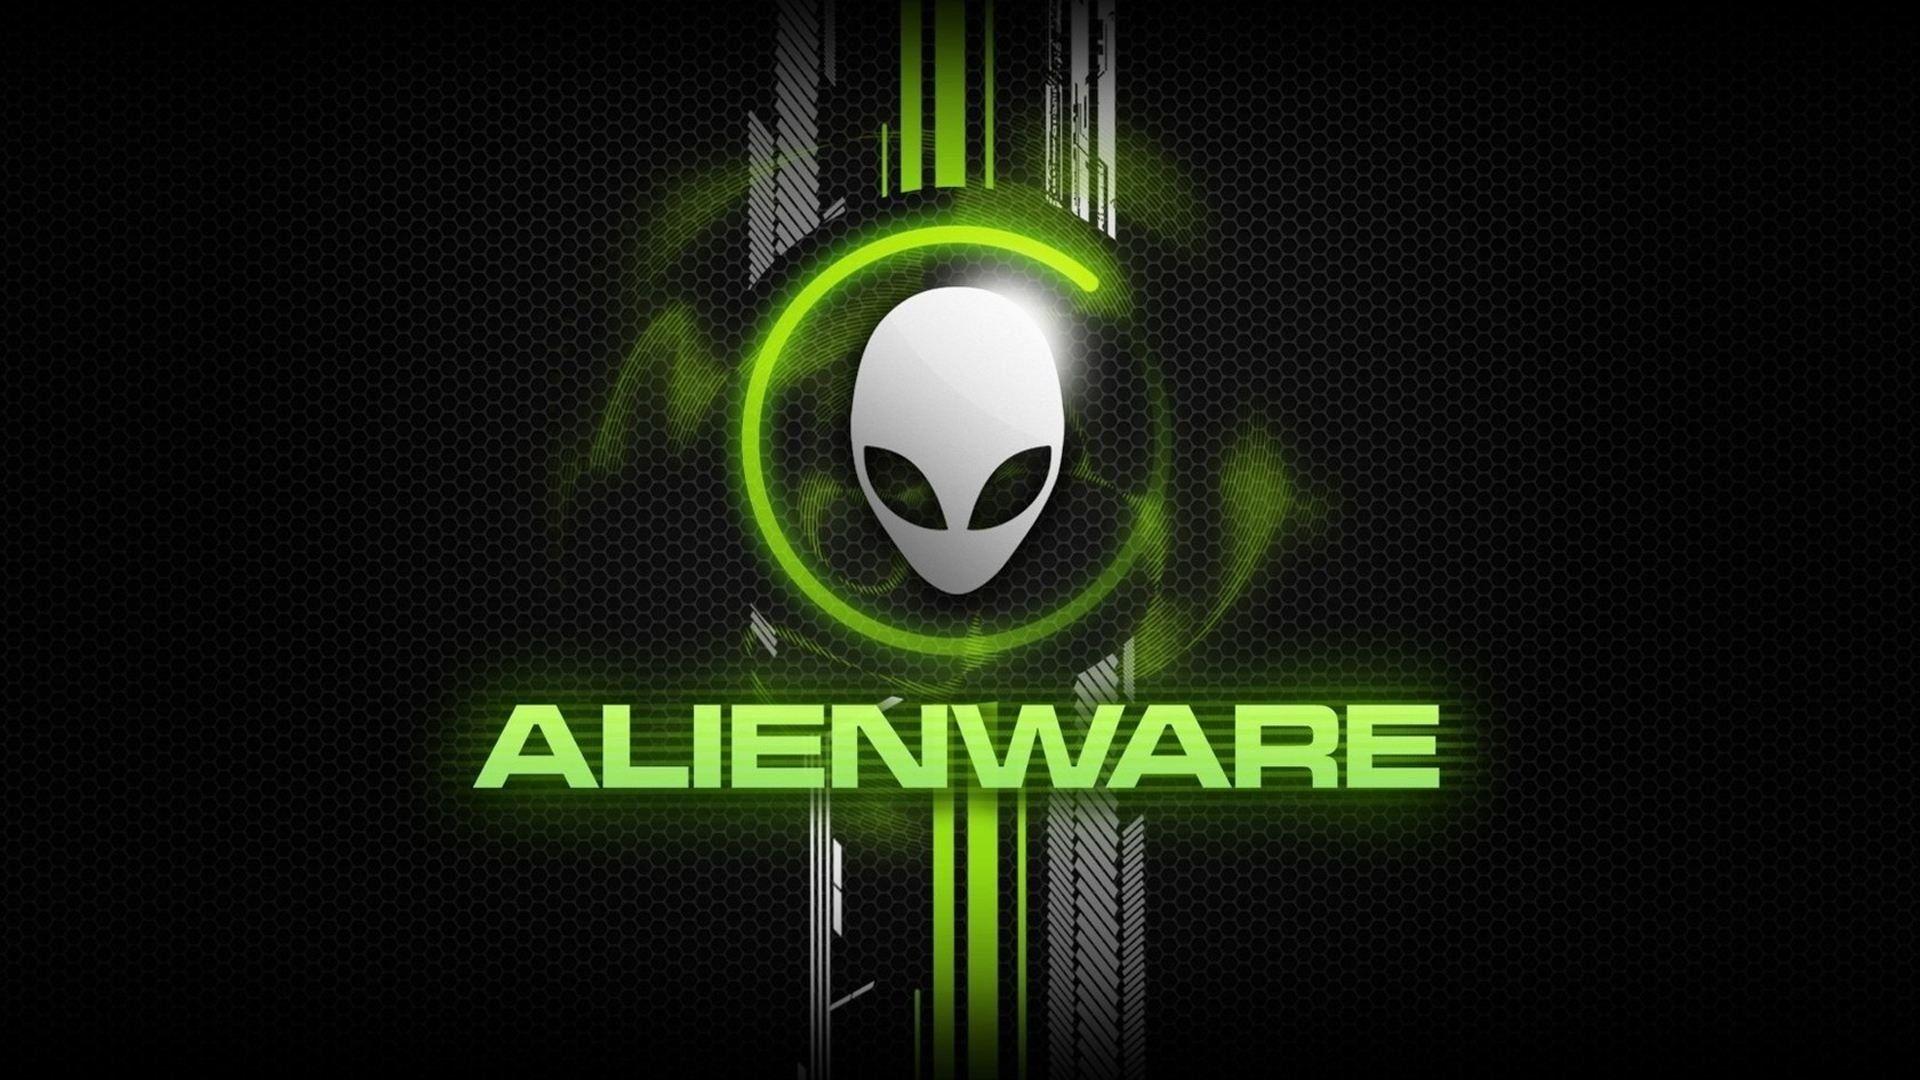 Green PC Logo - Alien Ware Green Text Logo HD Wallpaper | things i wish i had ...